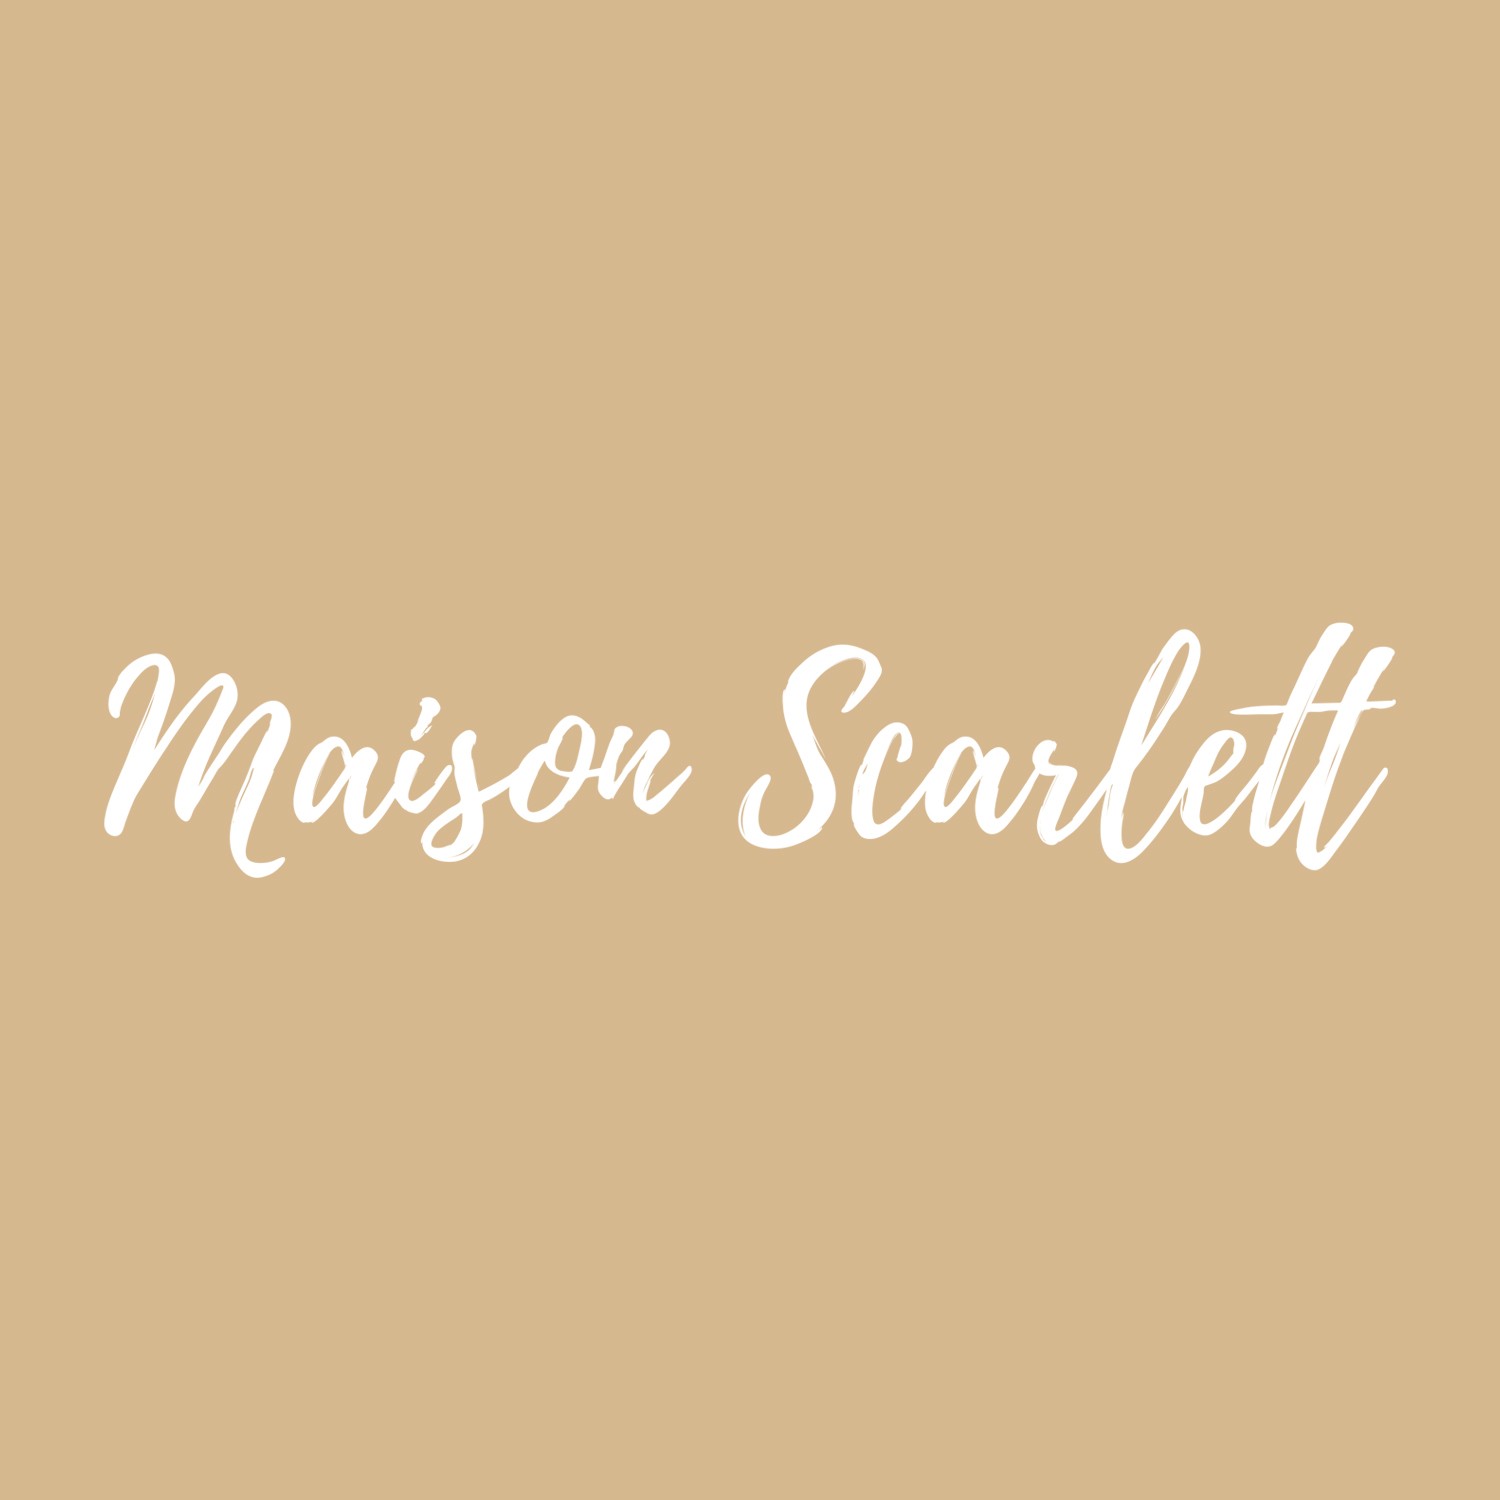 MAISON SCARLETT